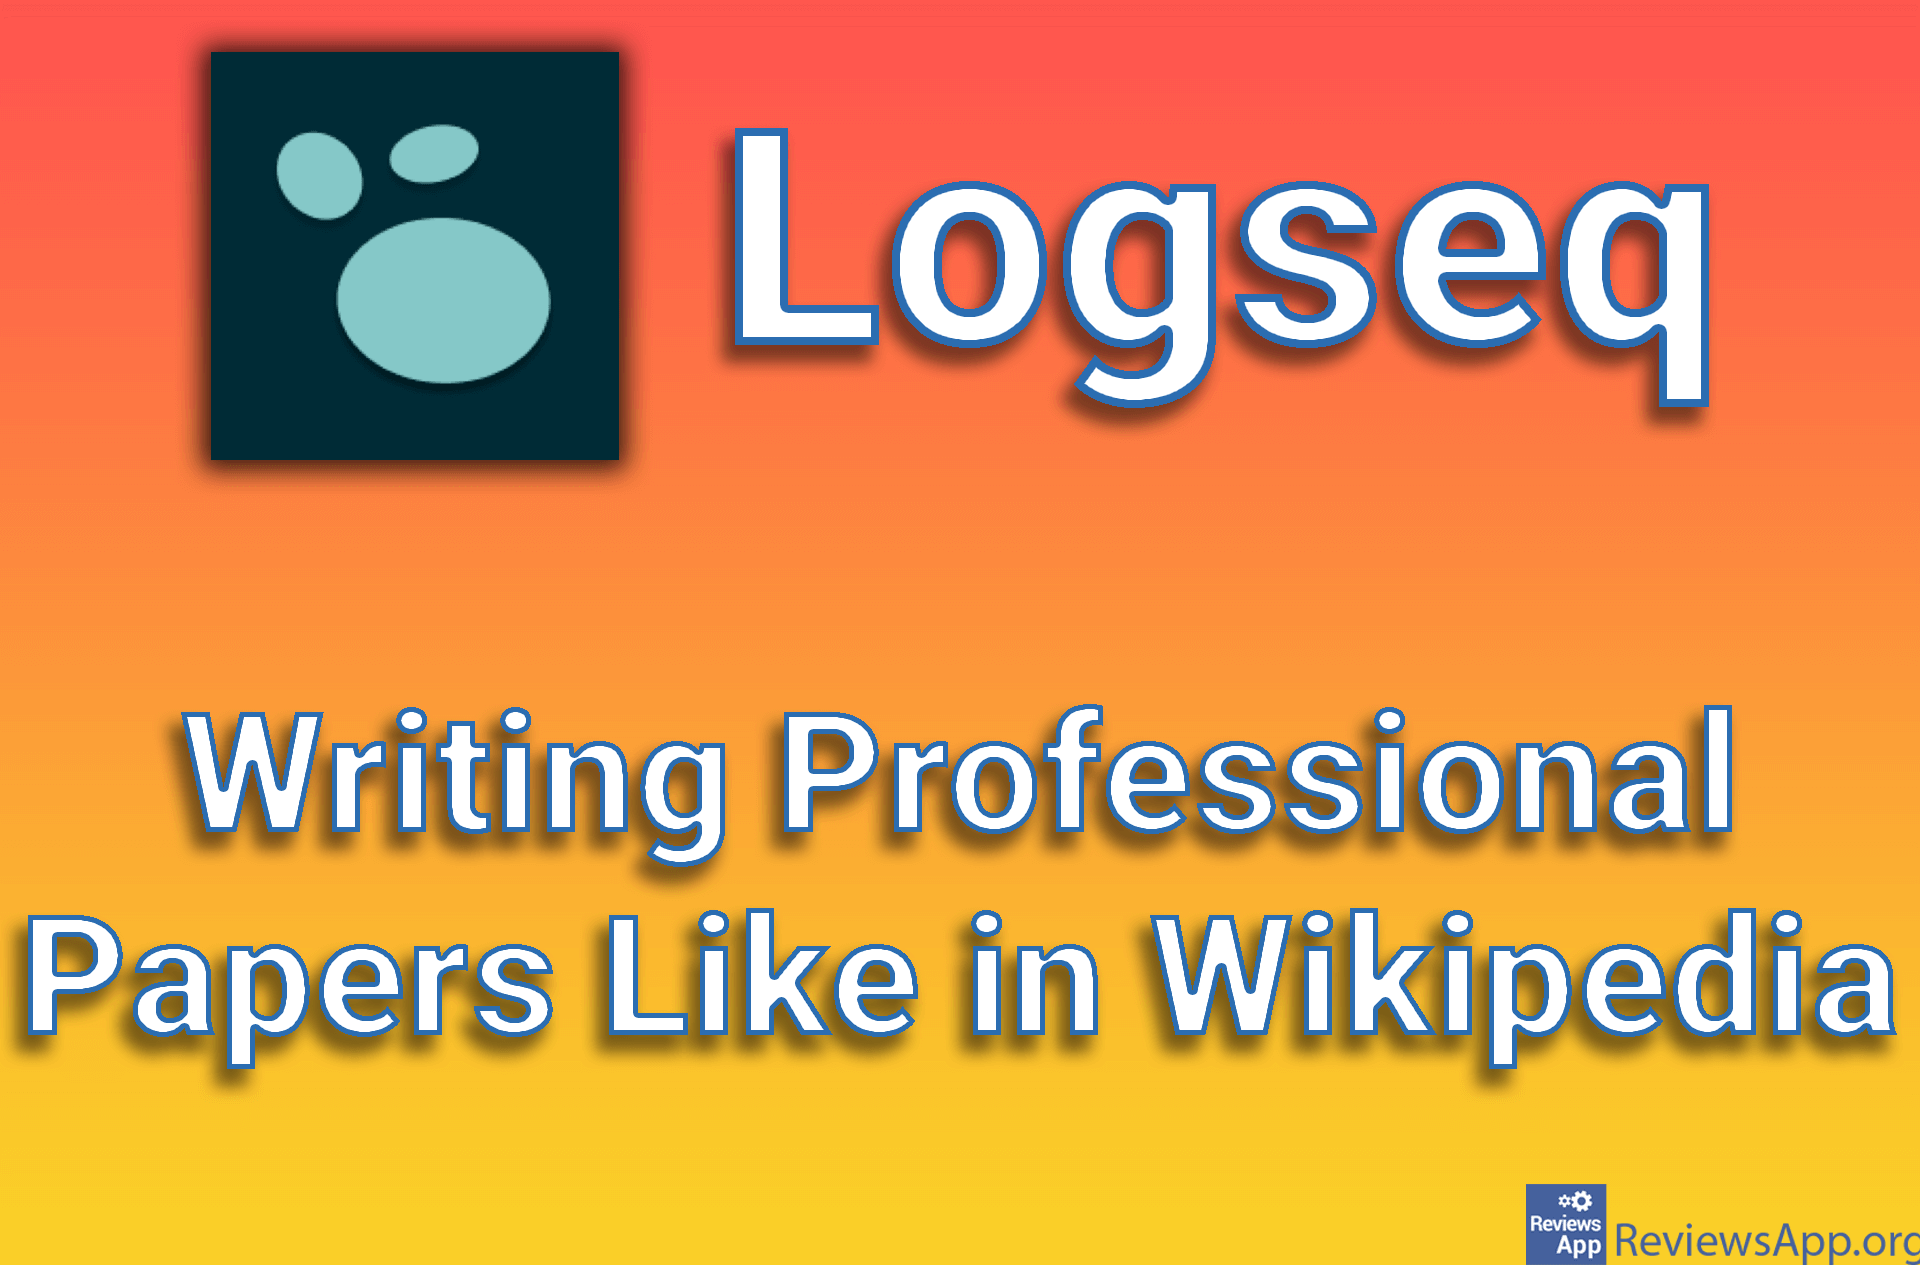 Logseq – Writing Professional Papers Like in Wikipedia